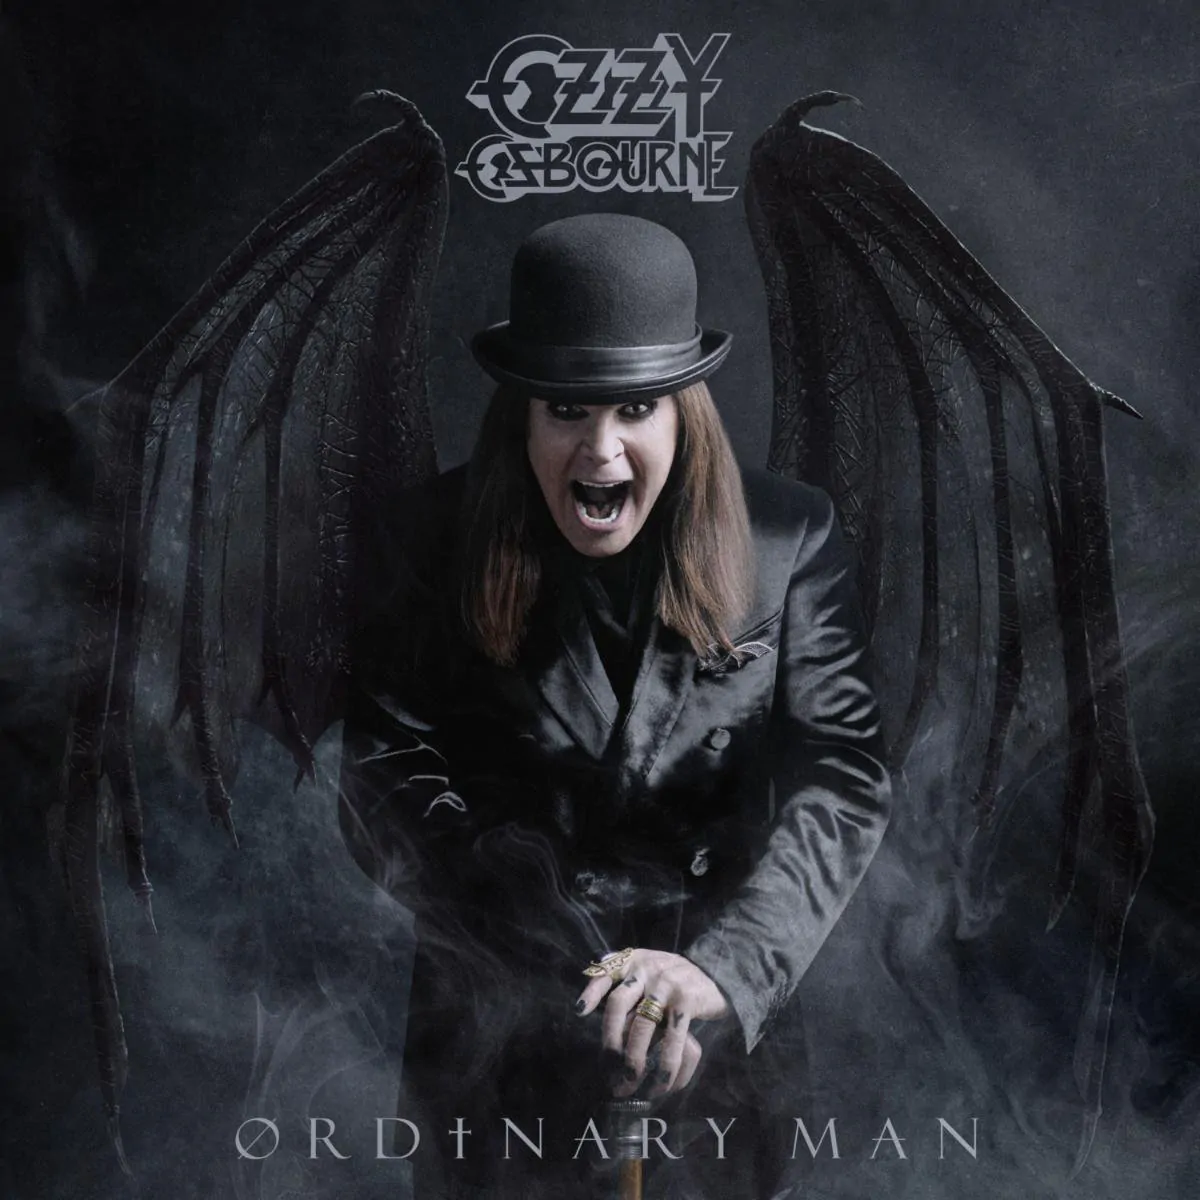 ALBUM REVIEW: Ozzy Osbourne – Ordinary Man